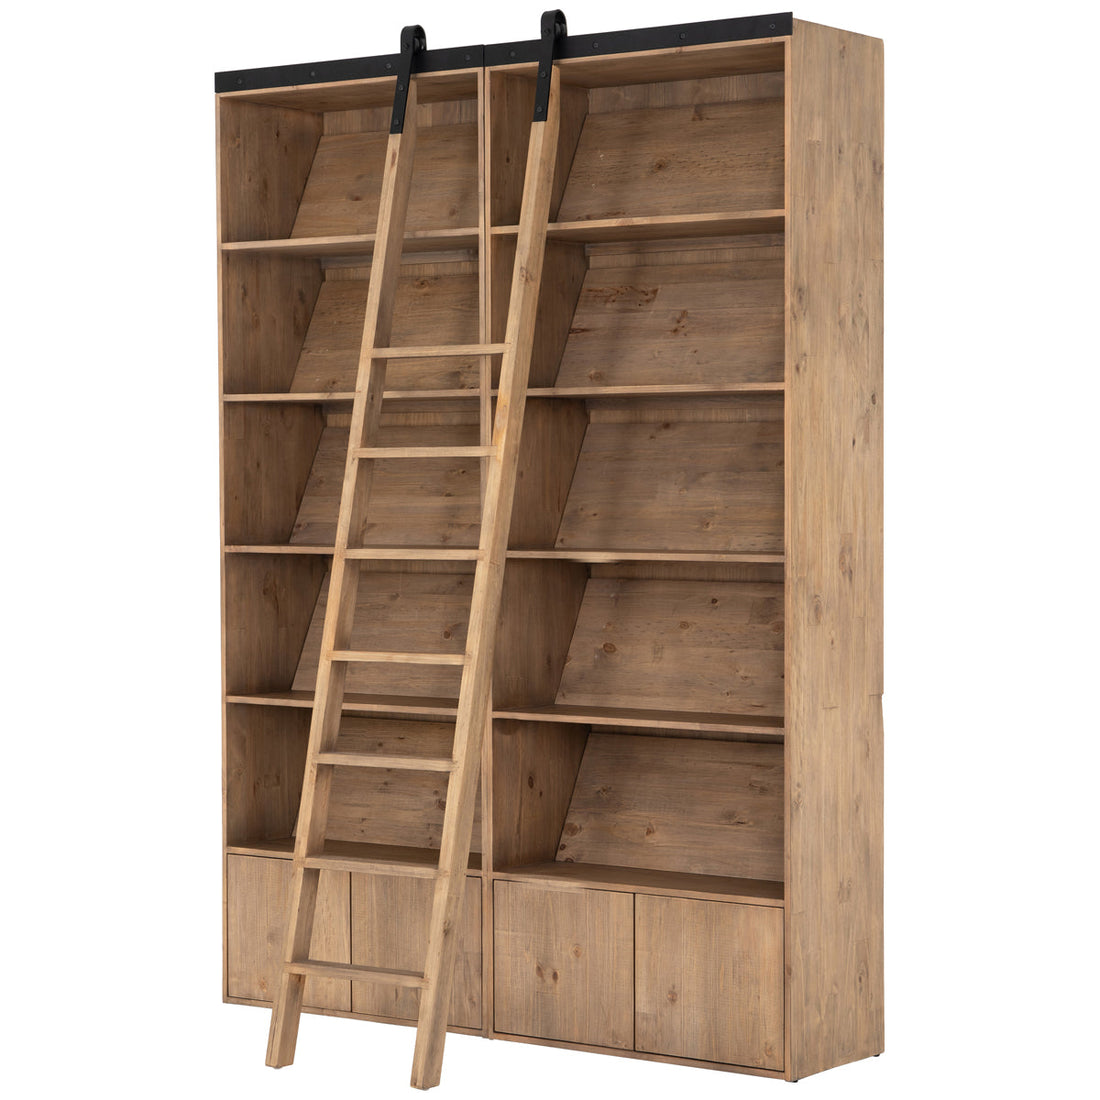 Four Hands Haiden Bane Double Bookshelf with Ladder